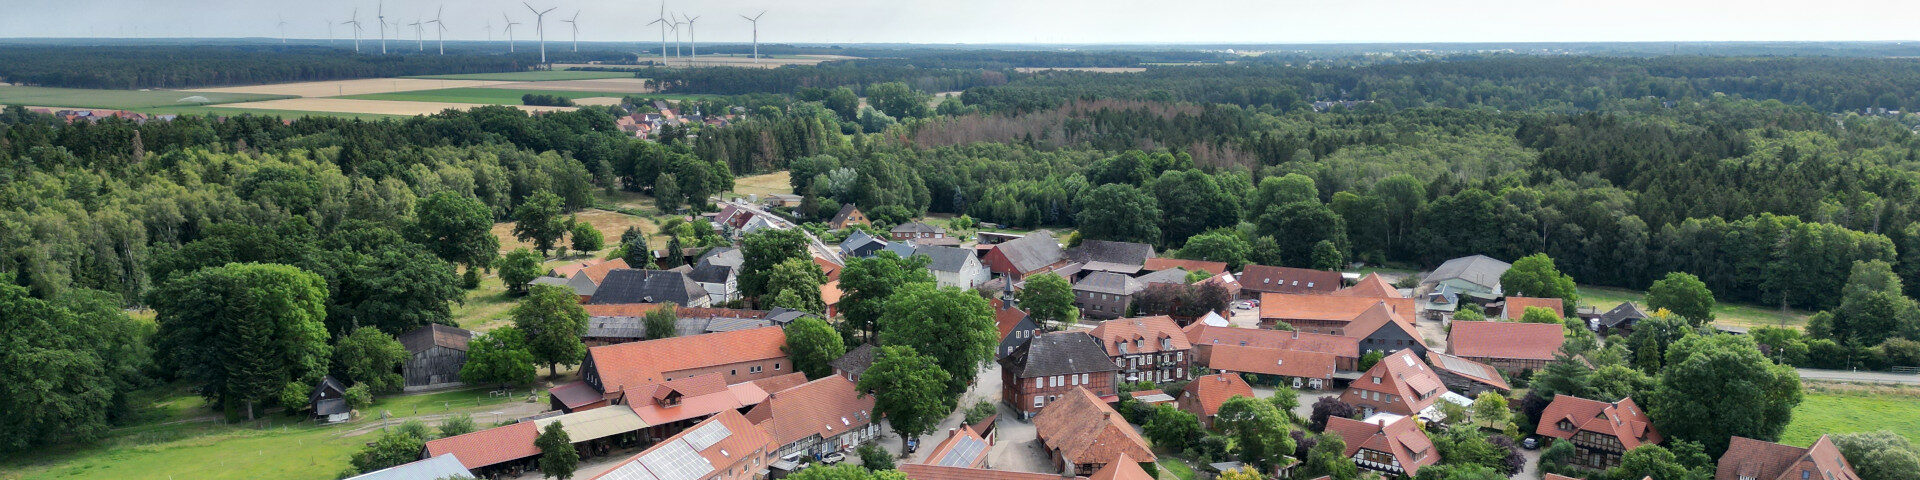 Gemeinde Bokensdorf